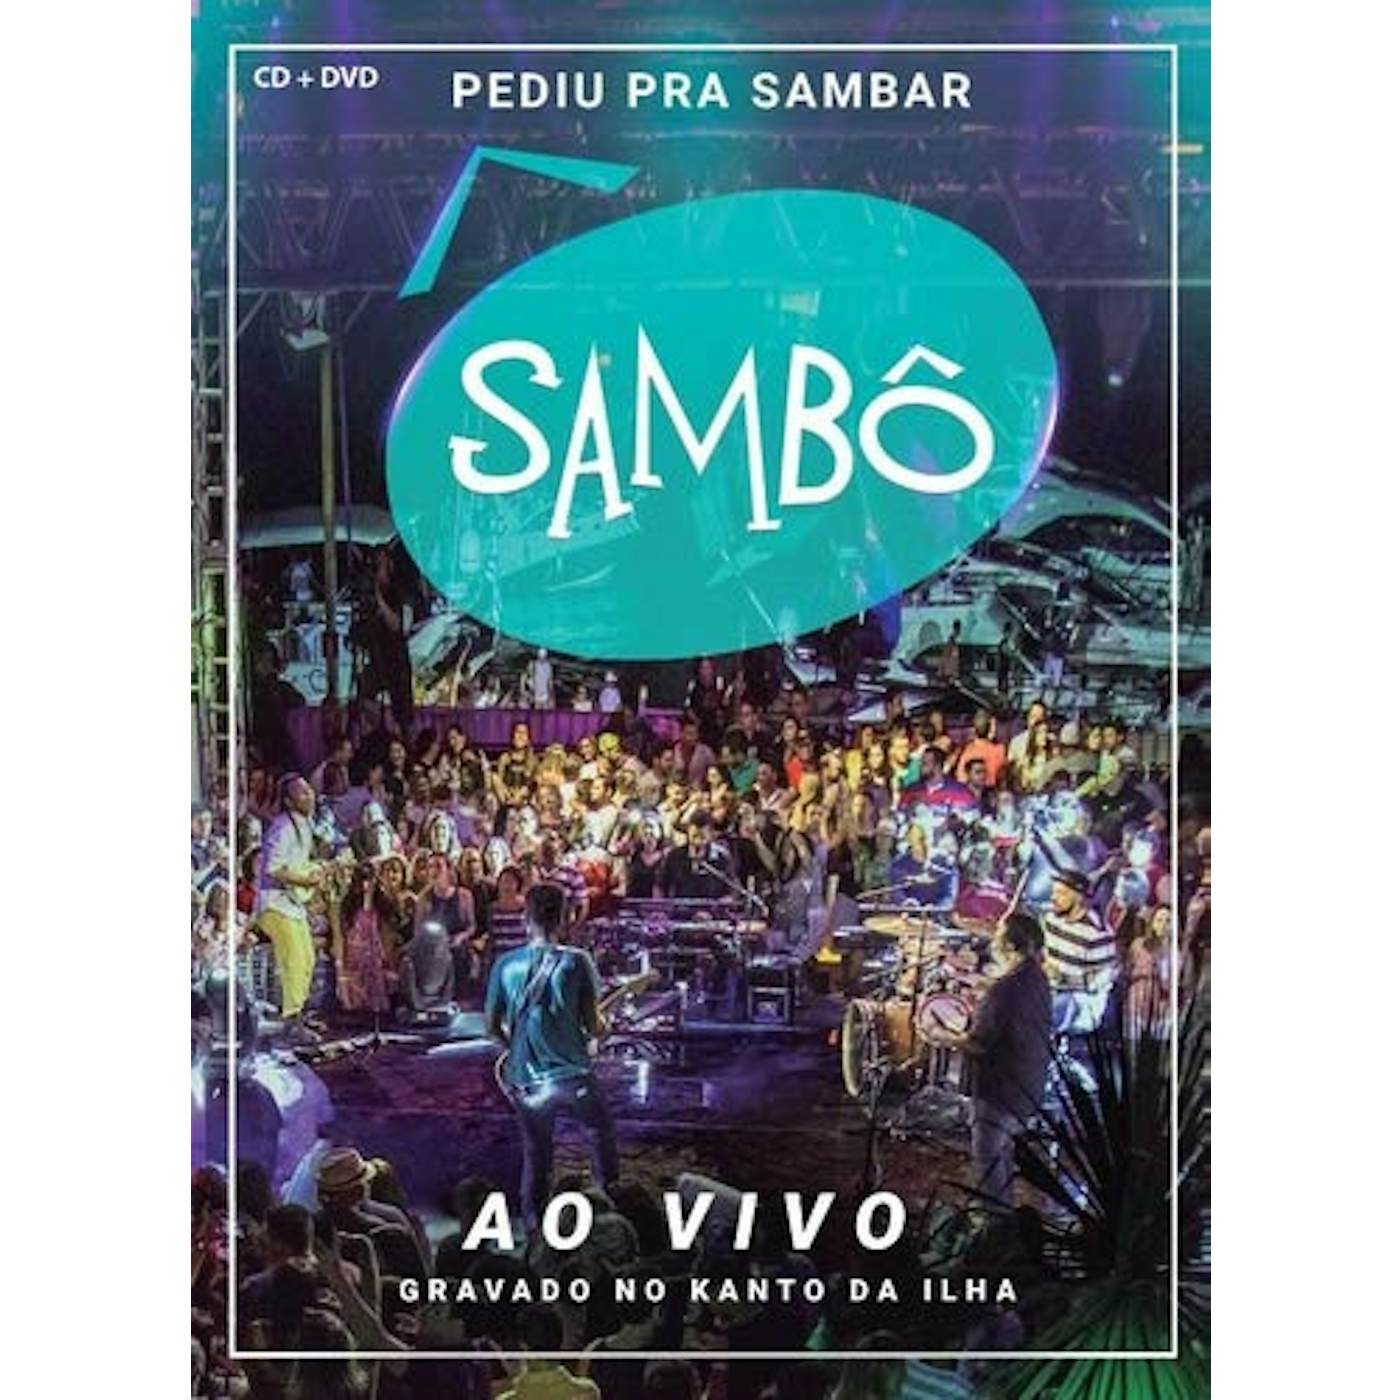 PEDIU PRA SAMBAR: SAMBO AO VIVO CD